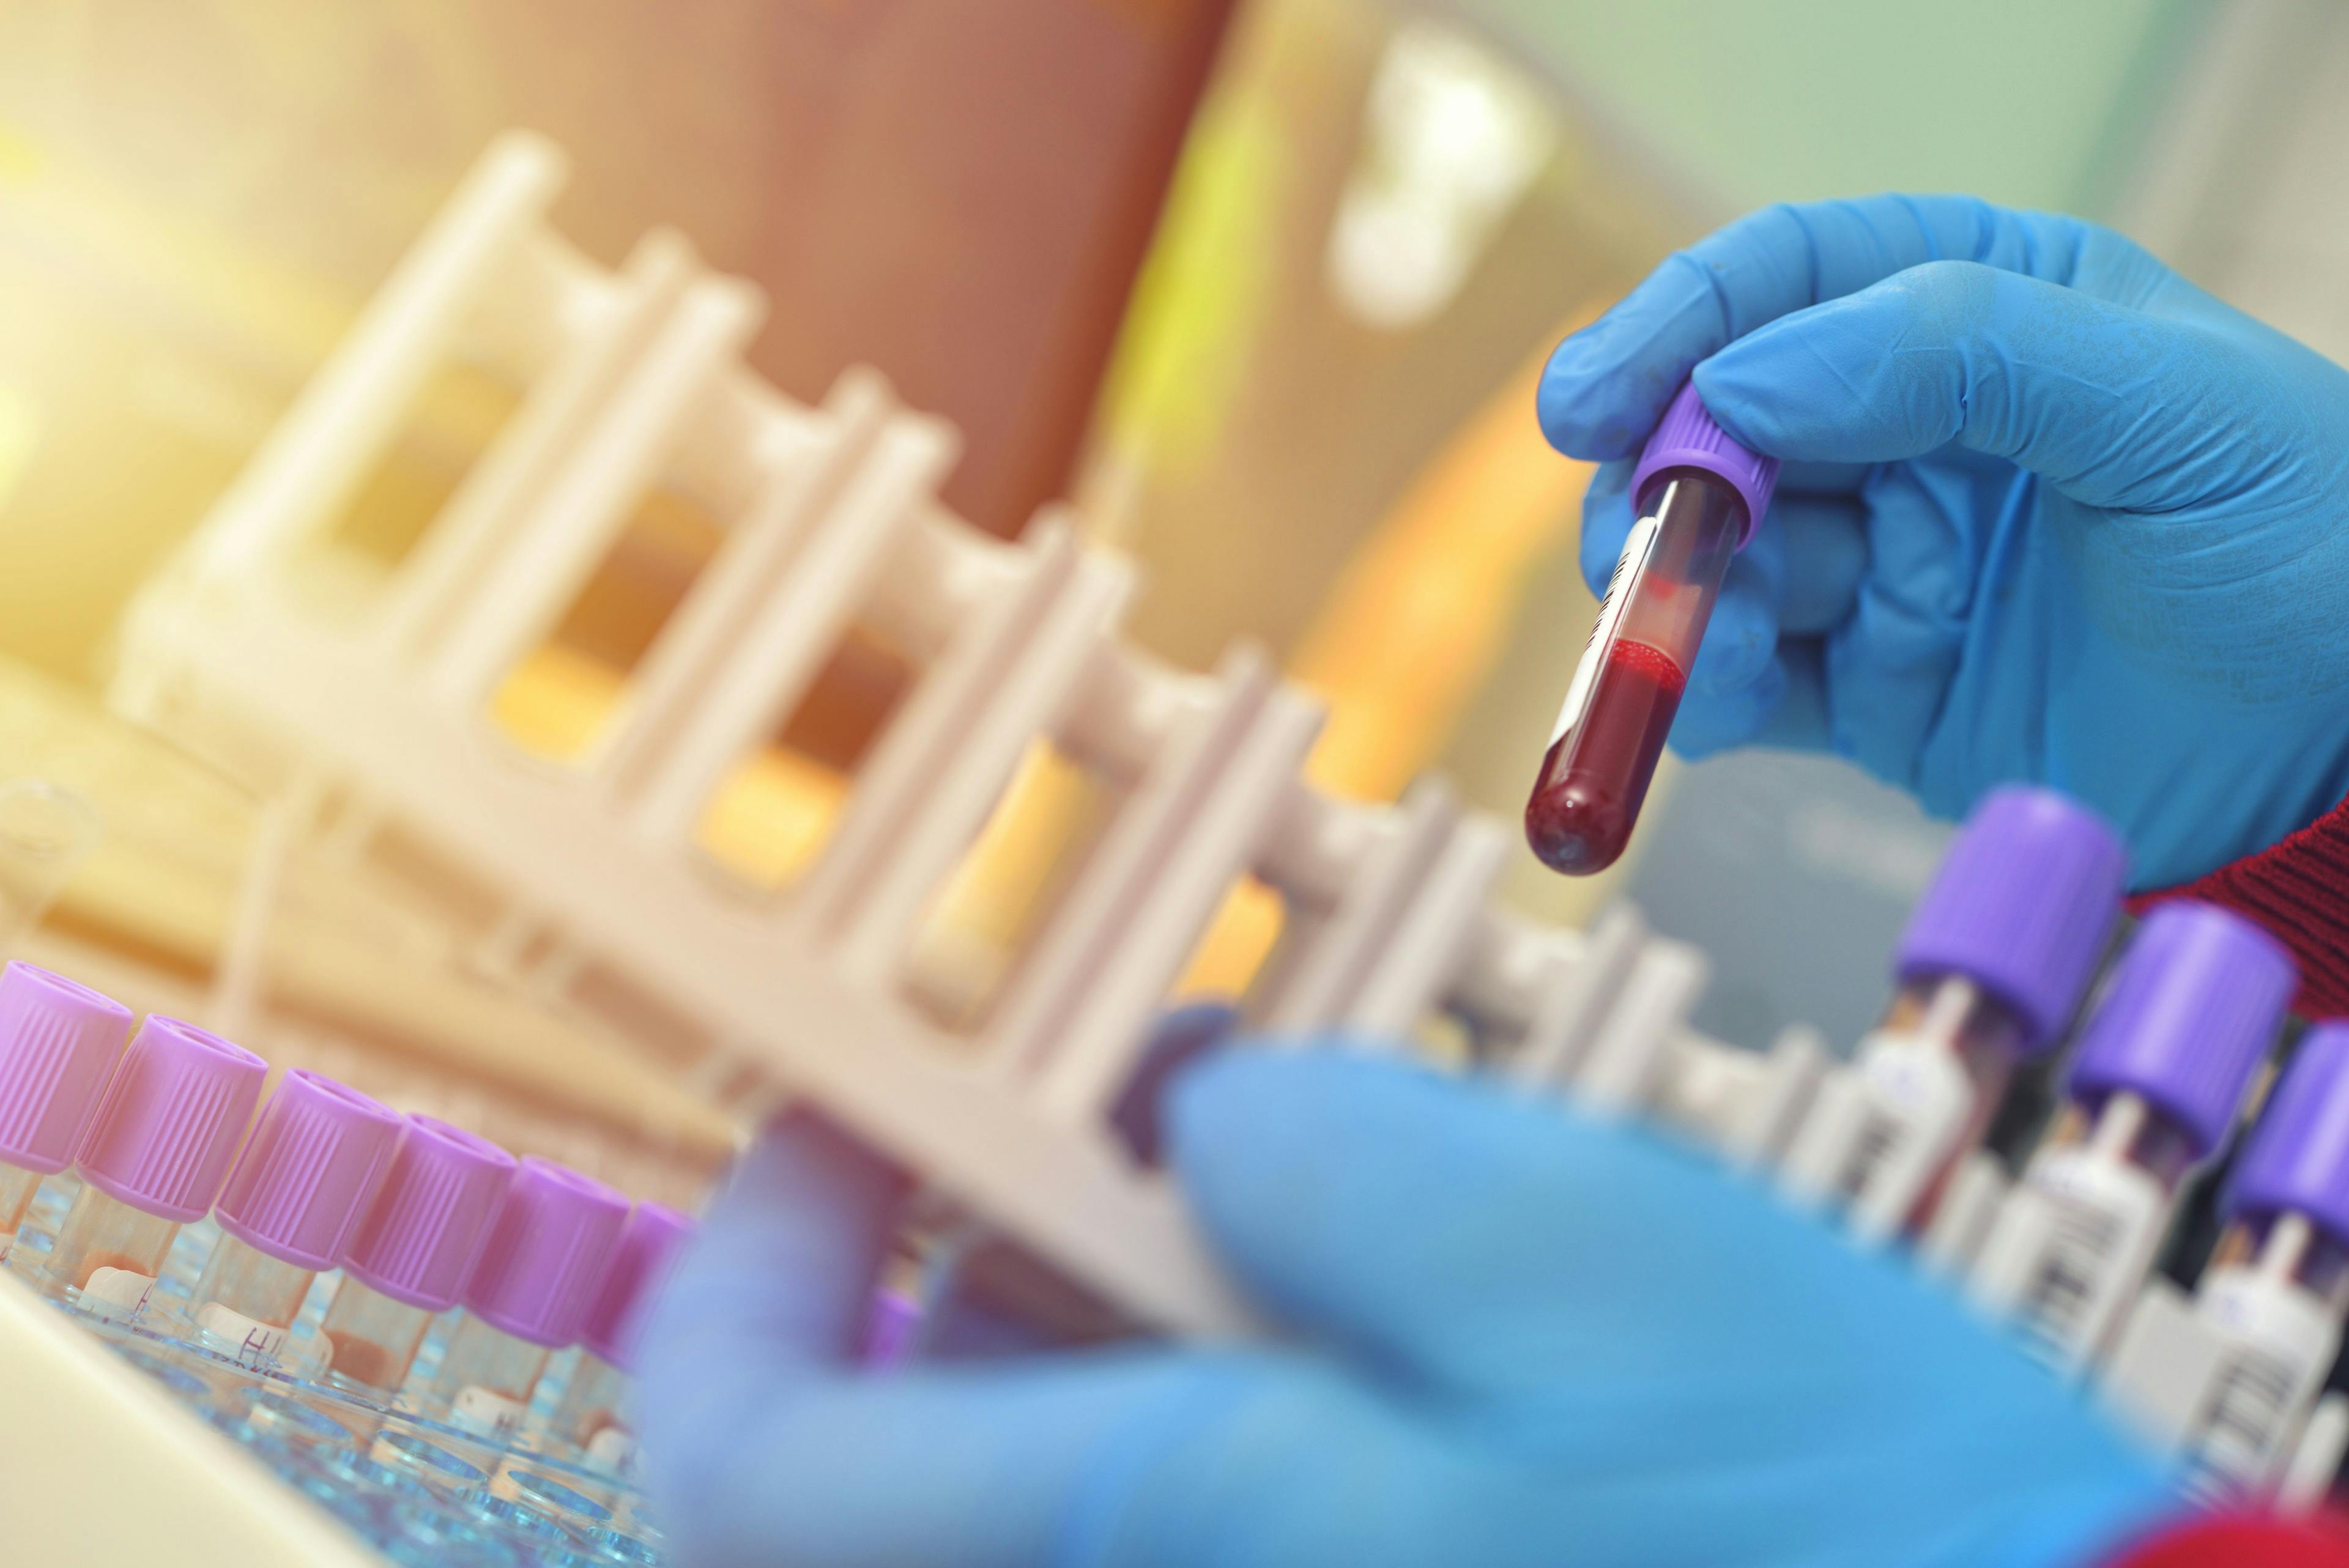 Blood samples | Image credit: © Daniel CHETRONI – stock.adobe.com